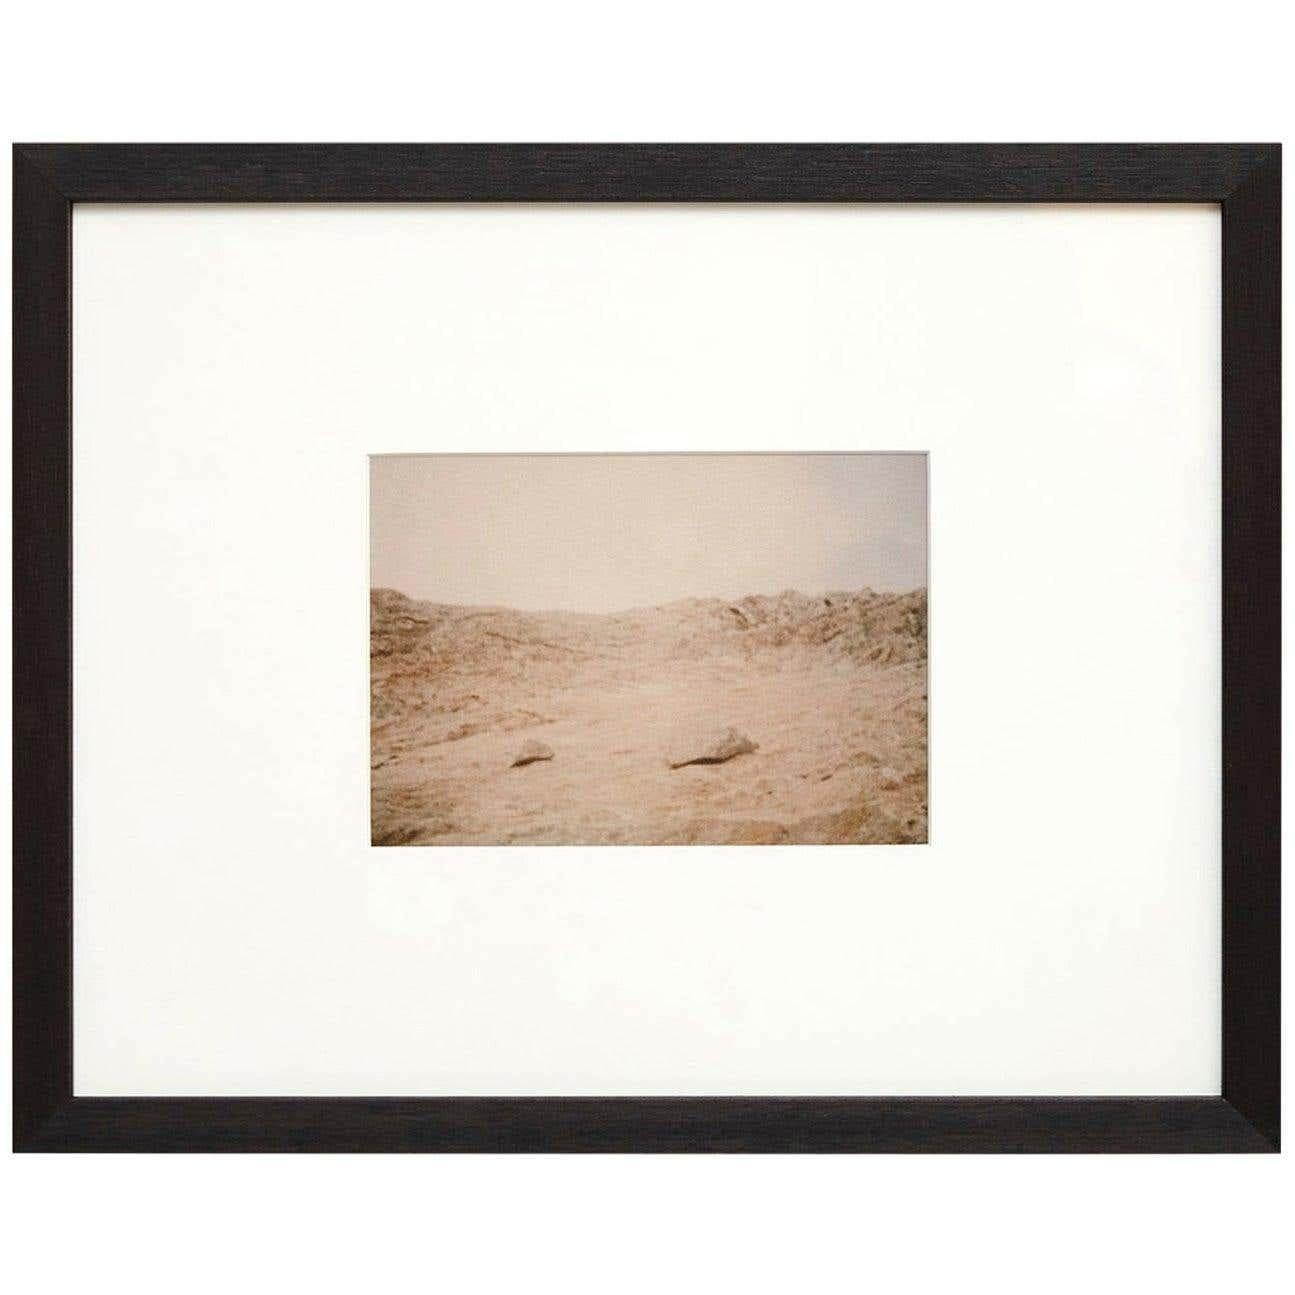 "Desert Landscape" by David Urbano, Rewind or Forward Serie, N01